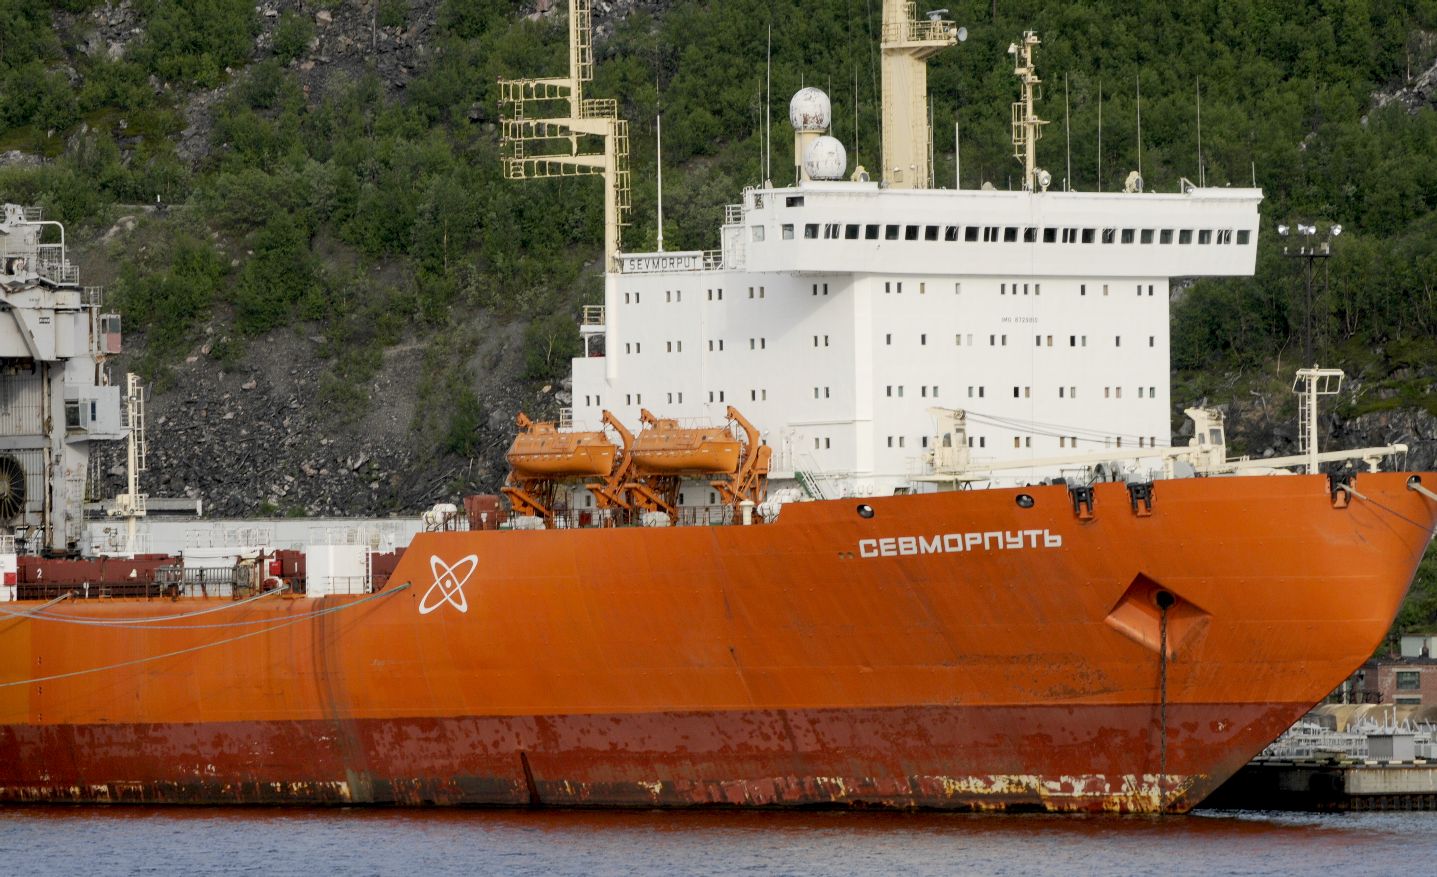 Russian nuclear powered ship, Sevmorput